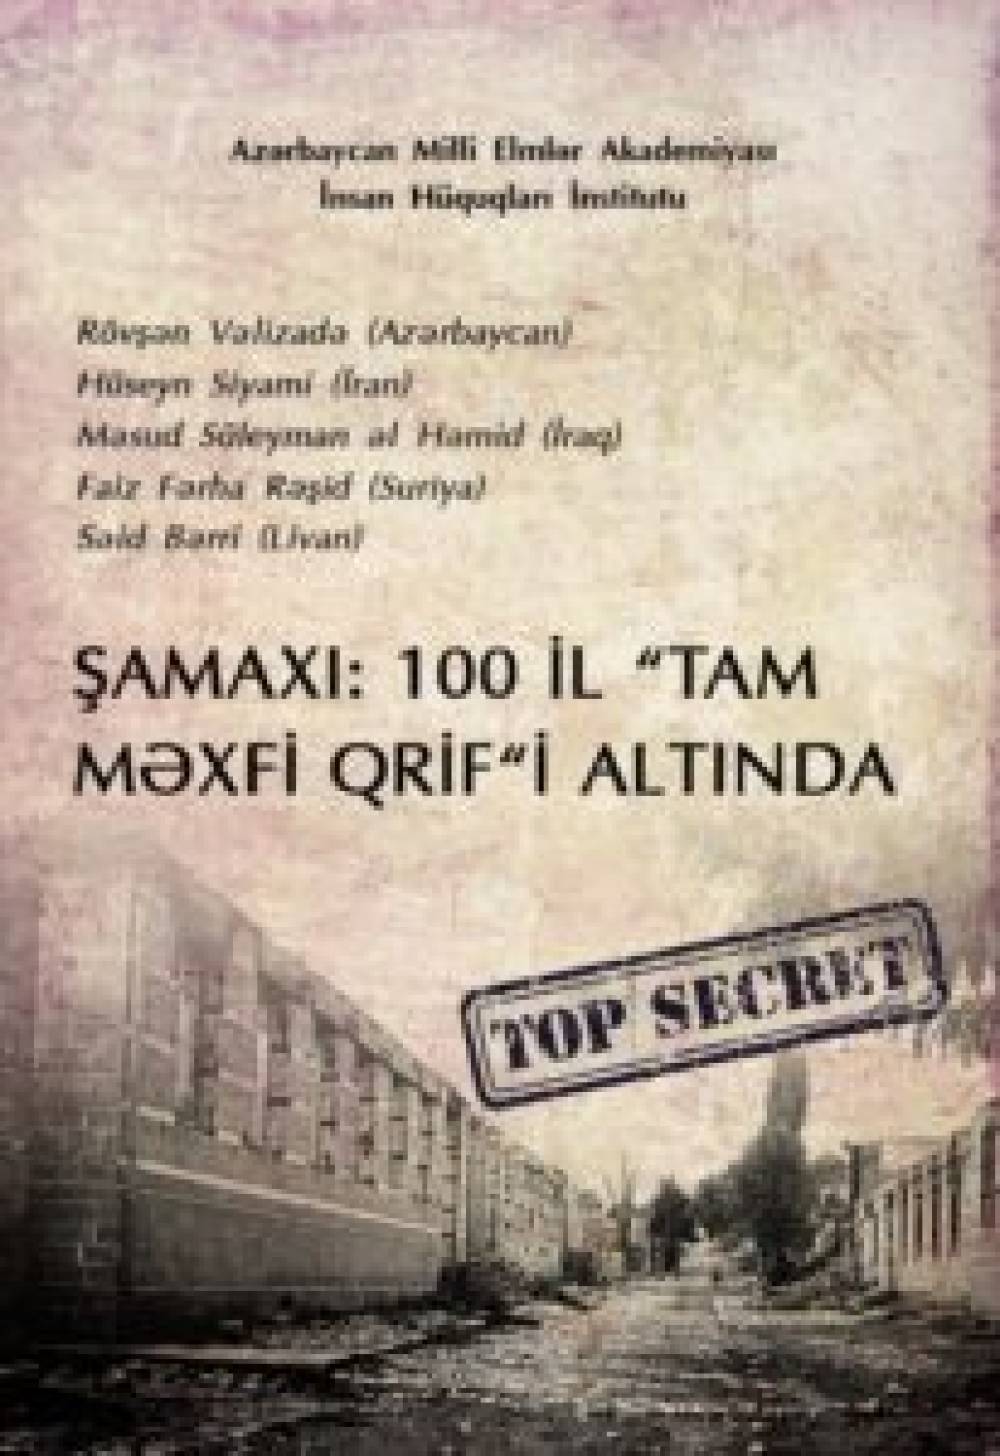 Shamakhi 100 year under "top-secret fingerboard"